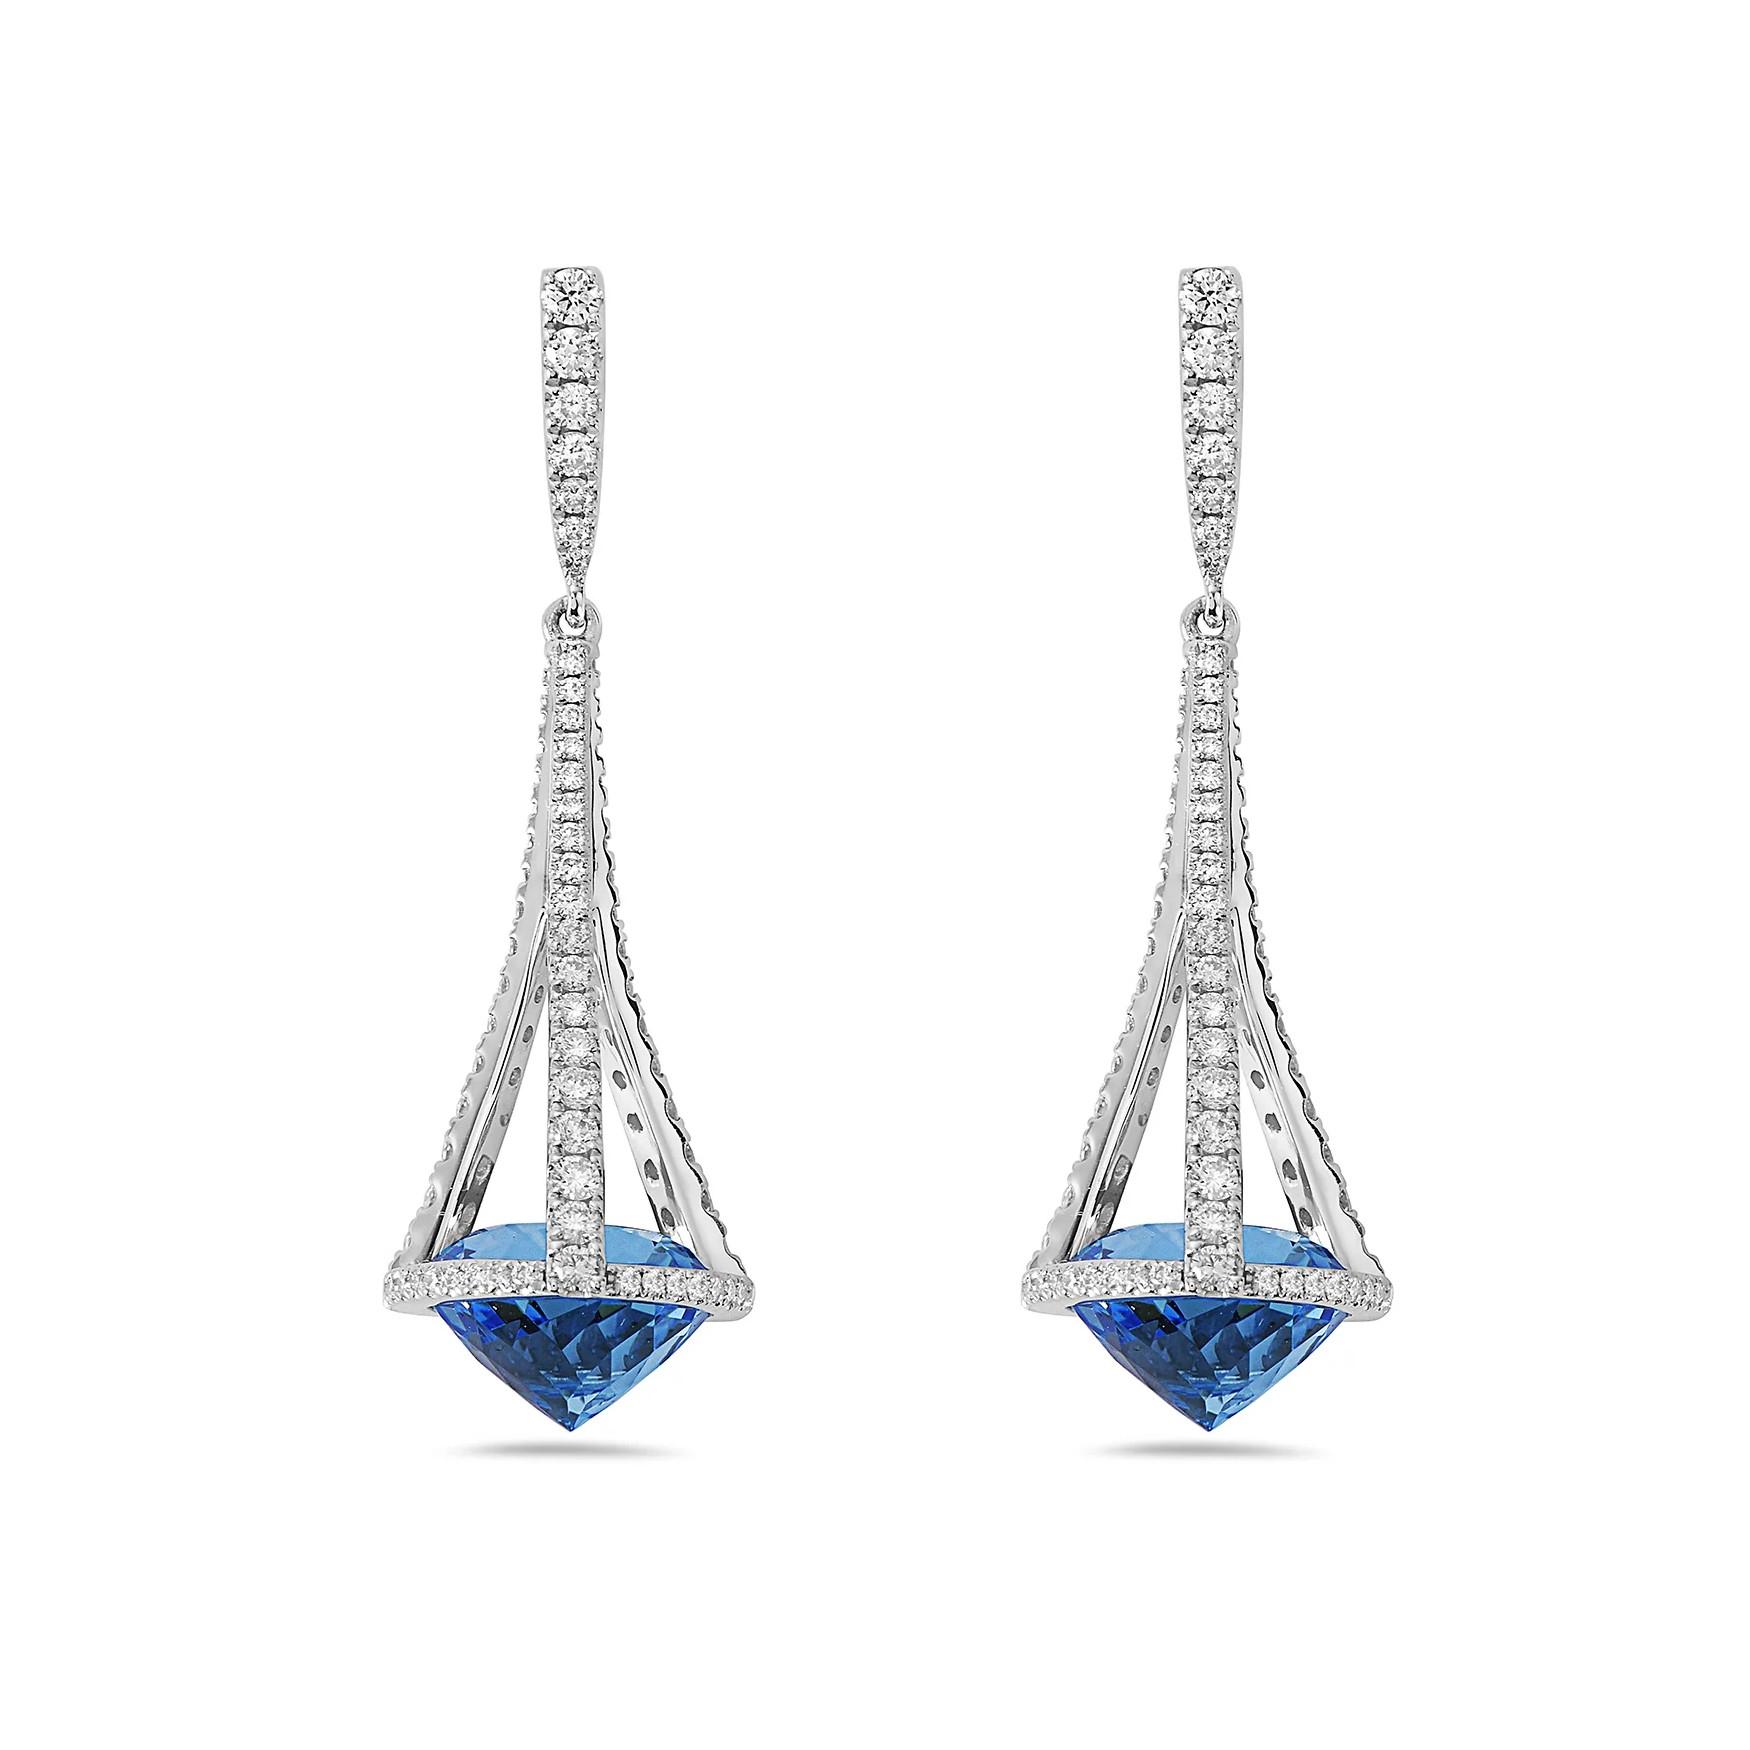 Charles Krypell London Blue Topaz and Diamond Chandelier Earrings